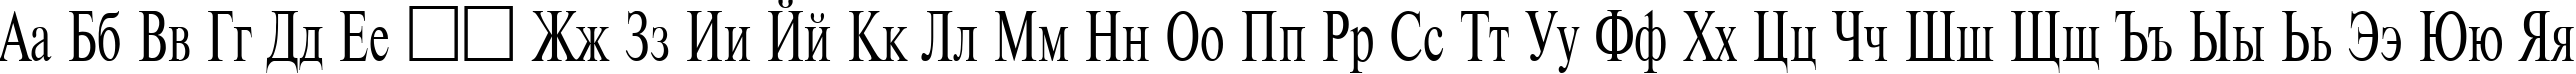 Пример написания русского алфавита шрифтом TimesET65n